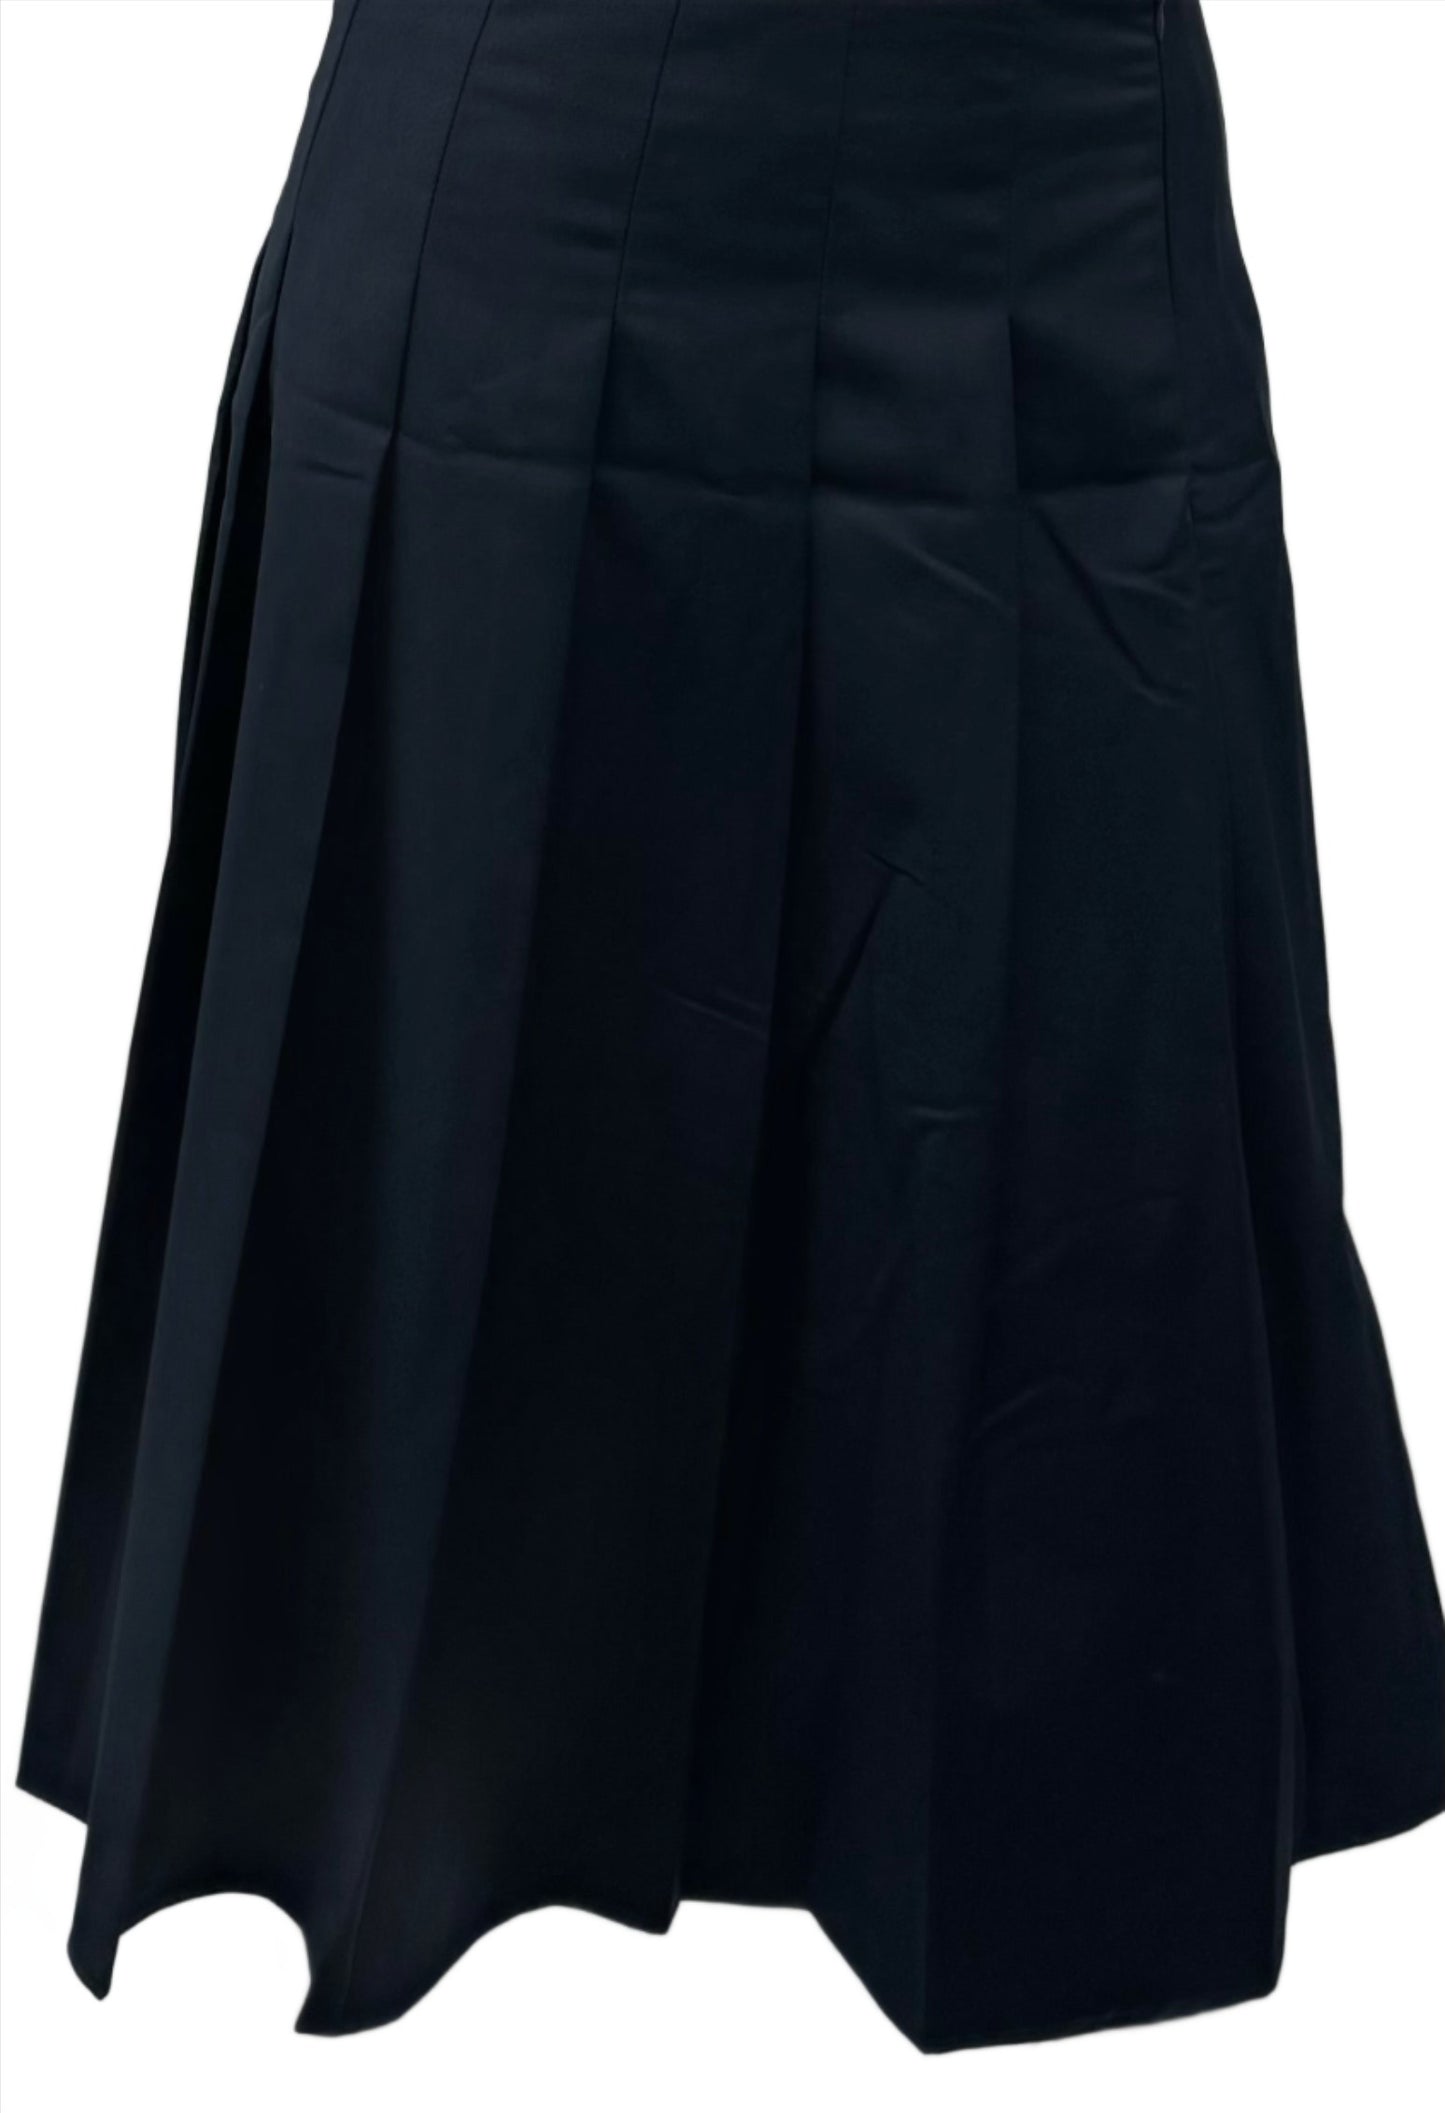 Classic Navy Pleated Skirt